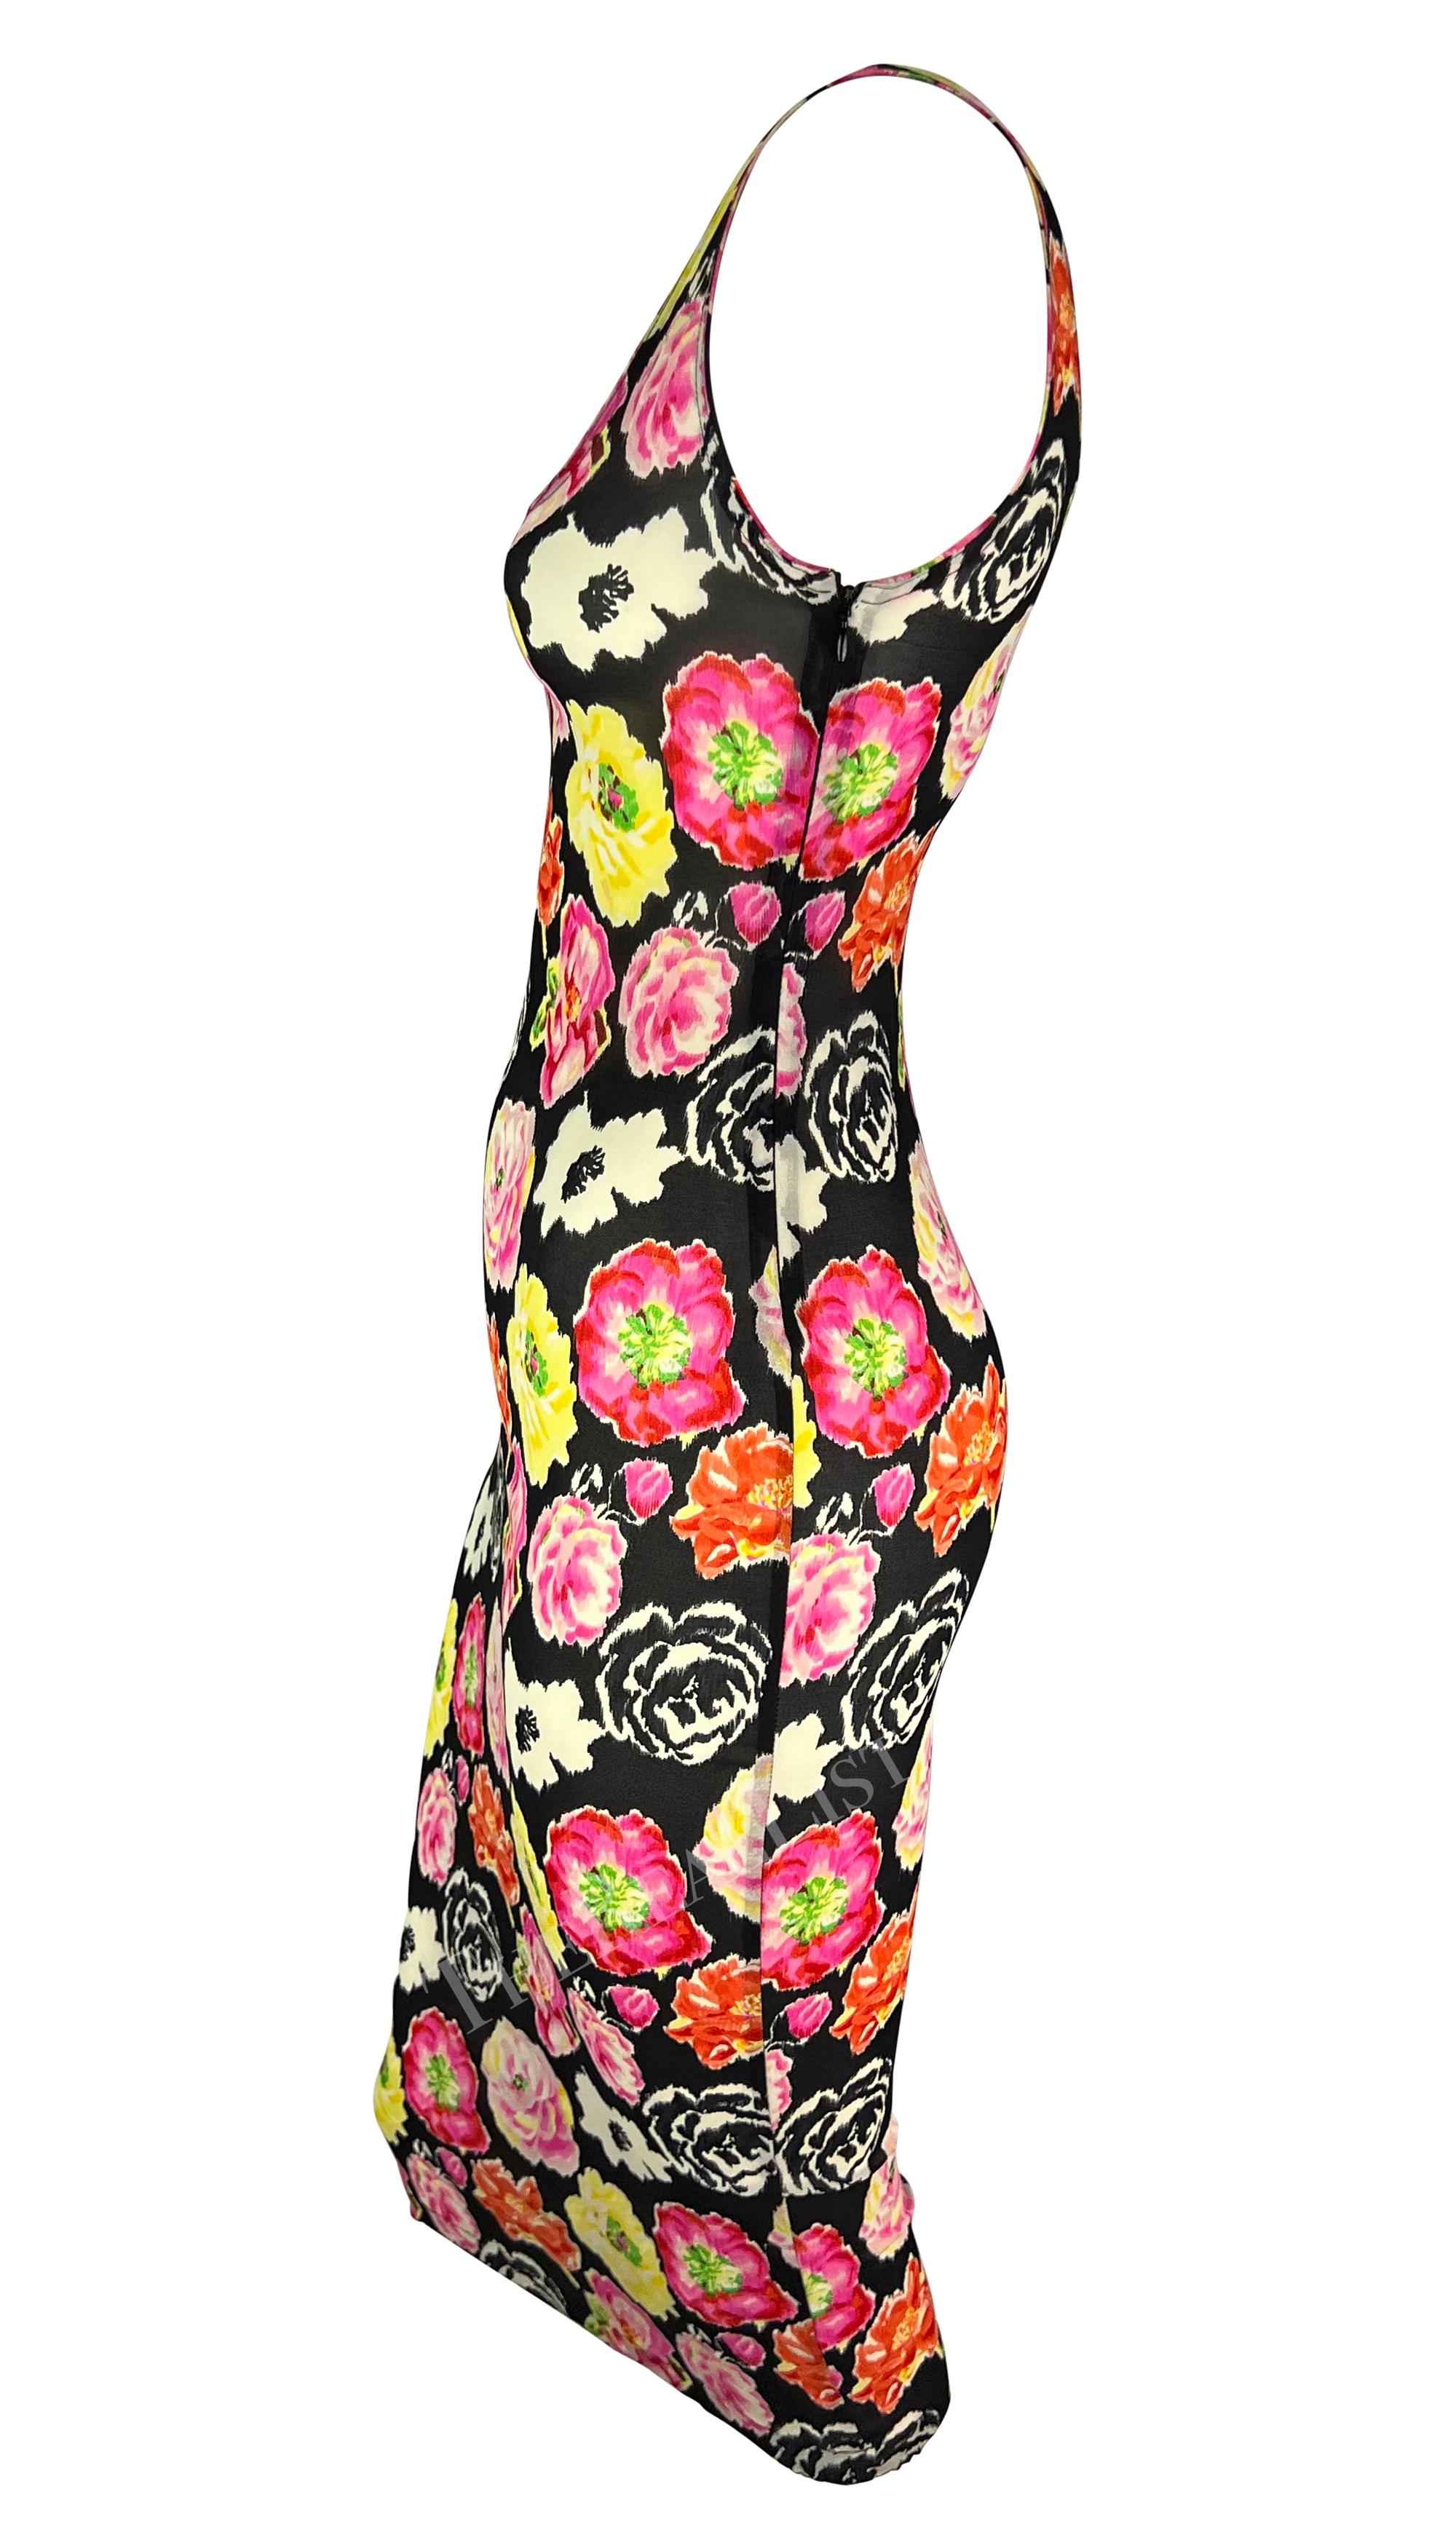 S/S 1995 Gianni Versace Runway Floral Print Semi-Sheer Slip Wiggle Dress For Sale 1